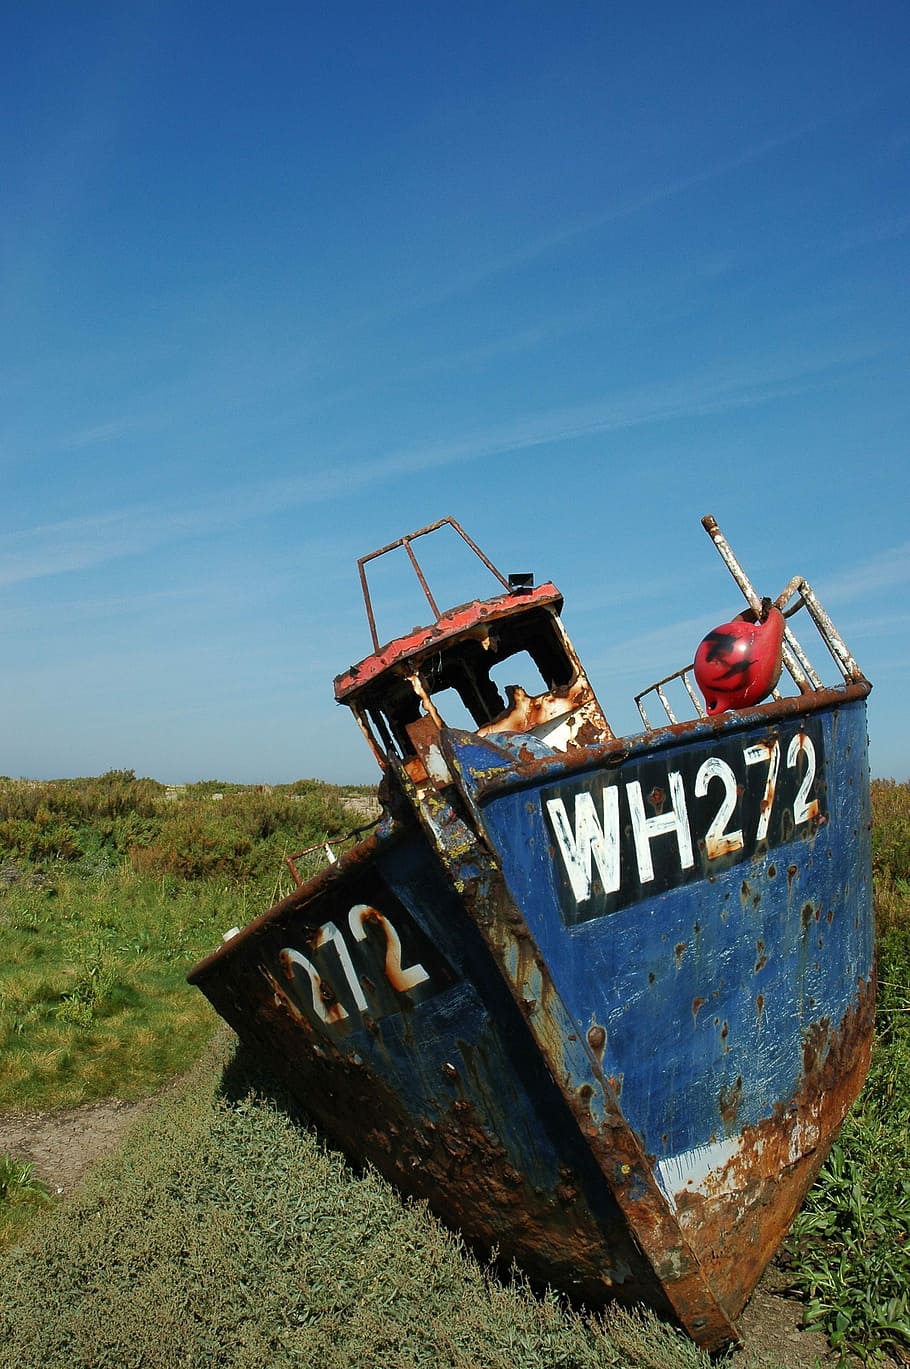 Boot, Wreck, Ship, Coast, England, norfolk, stranded, abandoned, blue, rusty